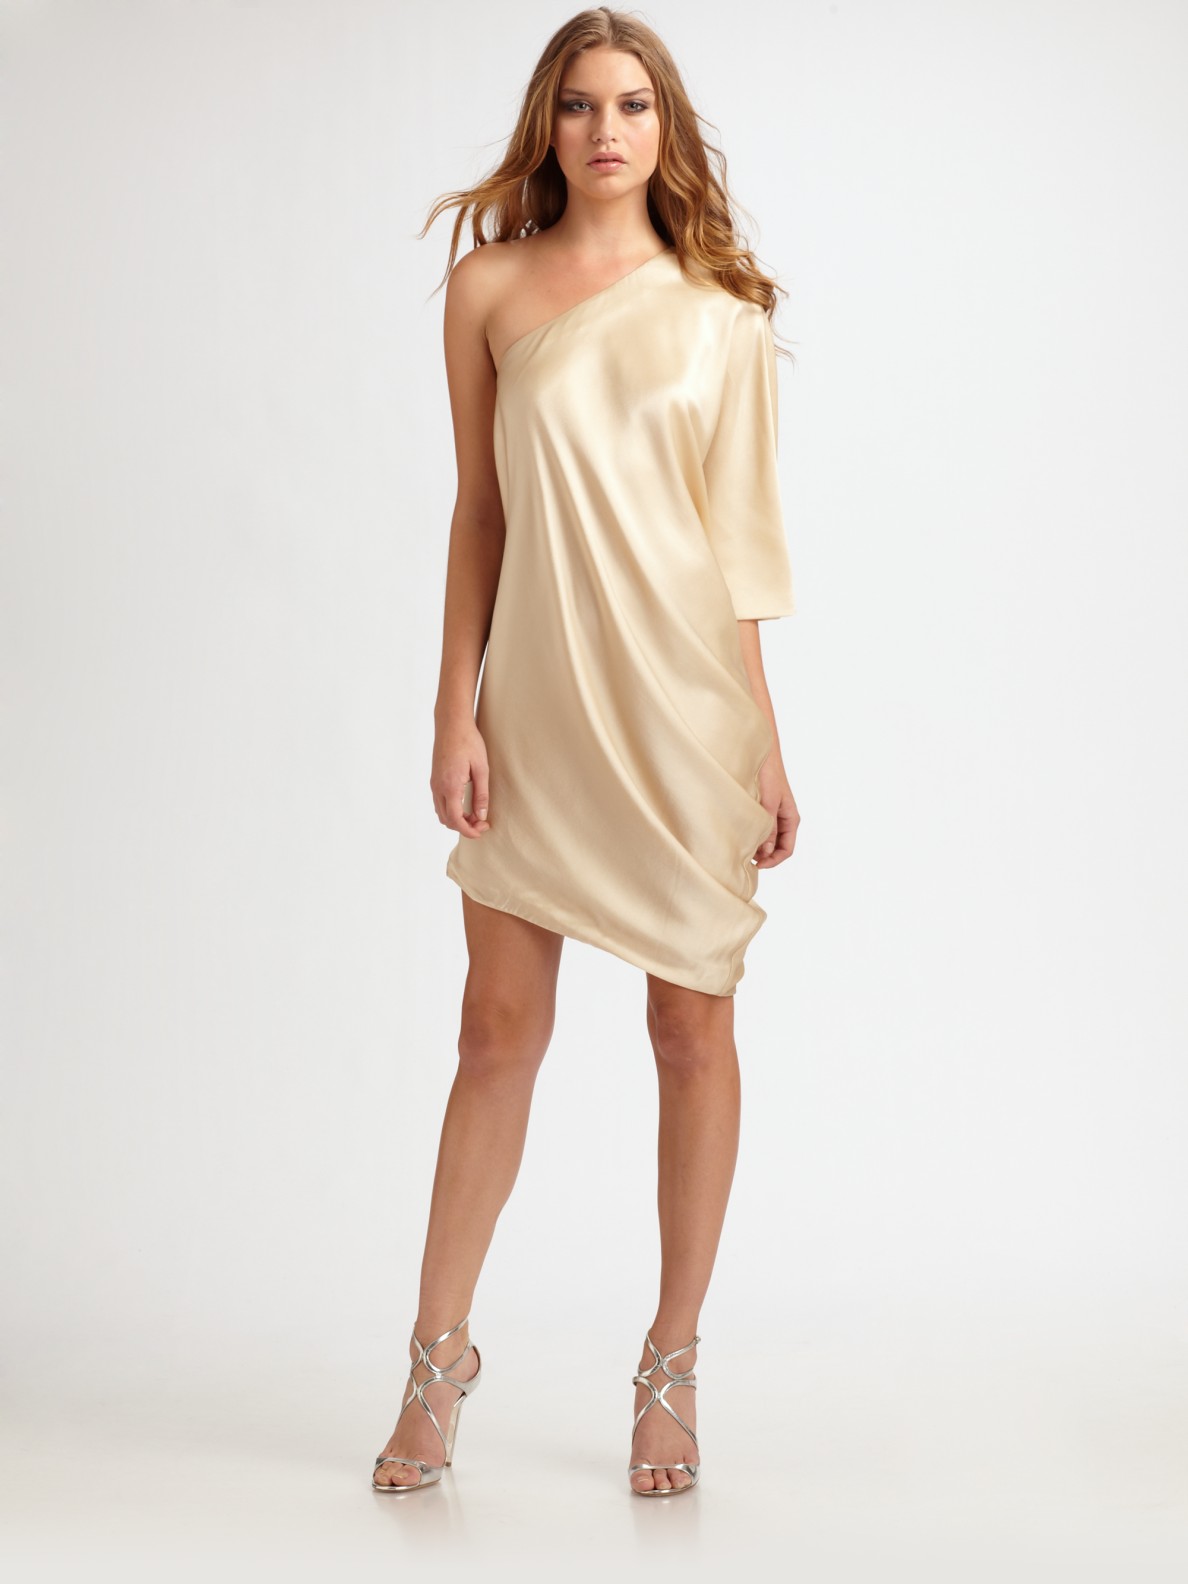 Lyst - Halston One-sleeve Drape Dress in Metallic